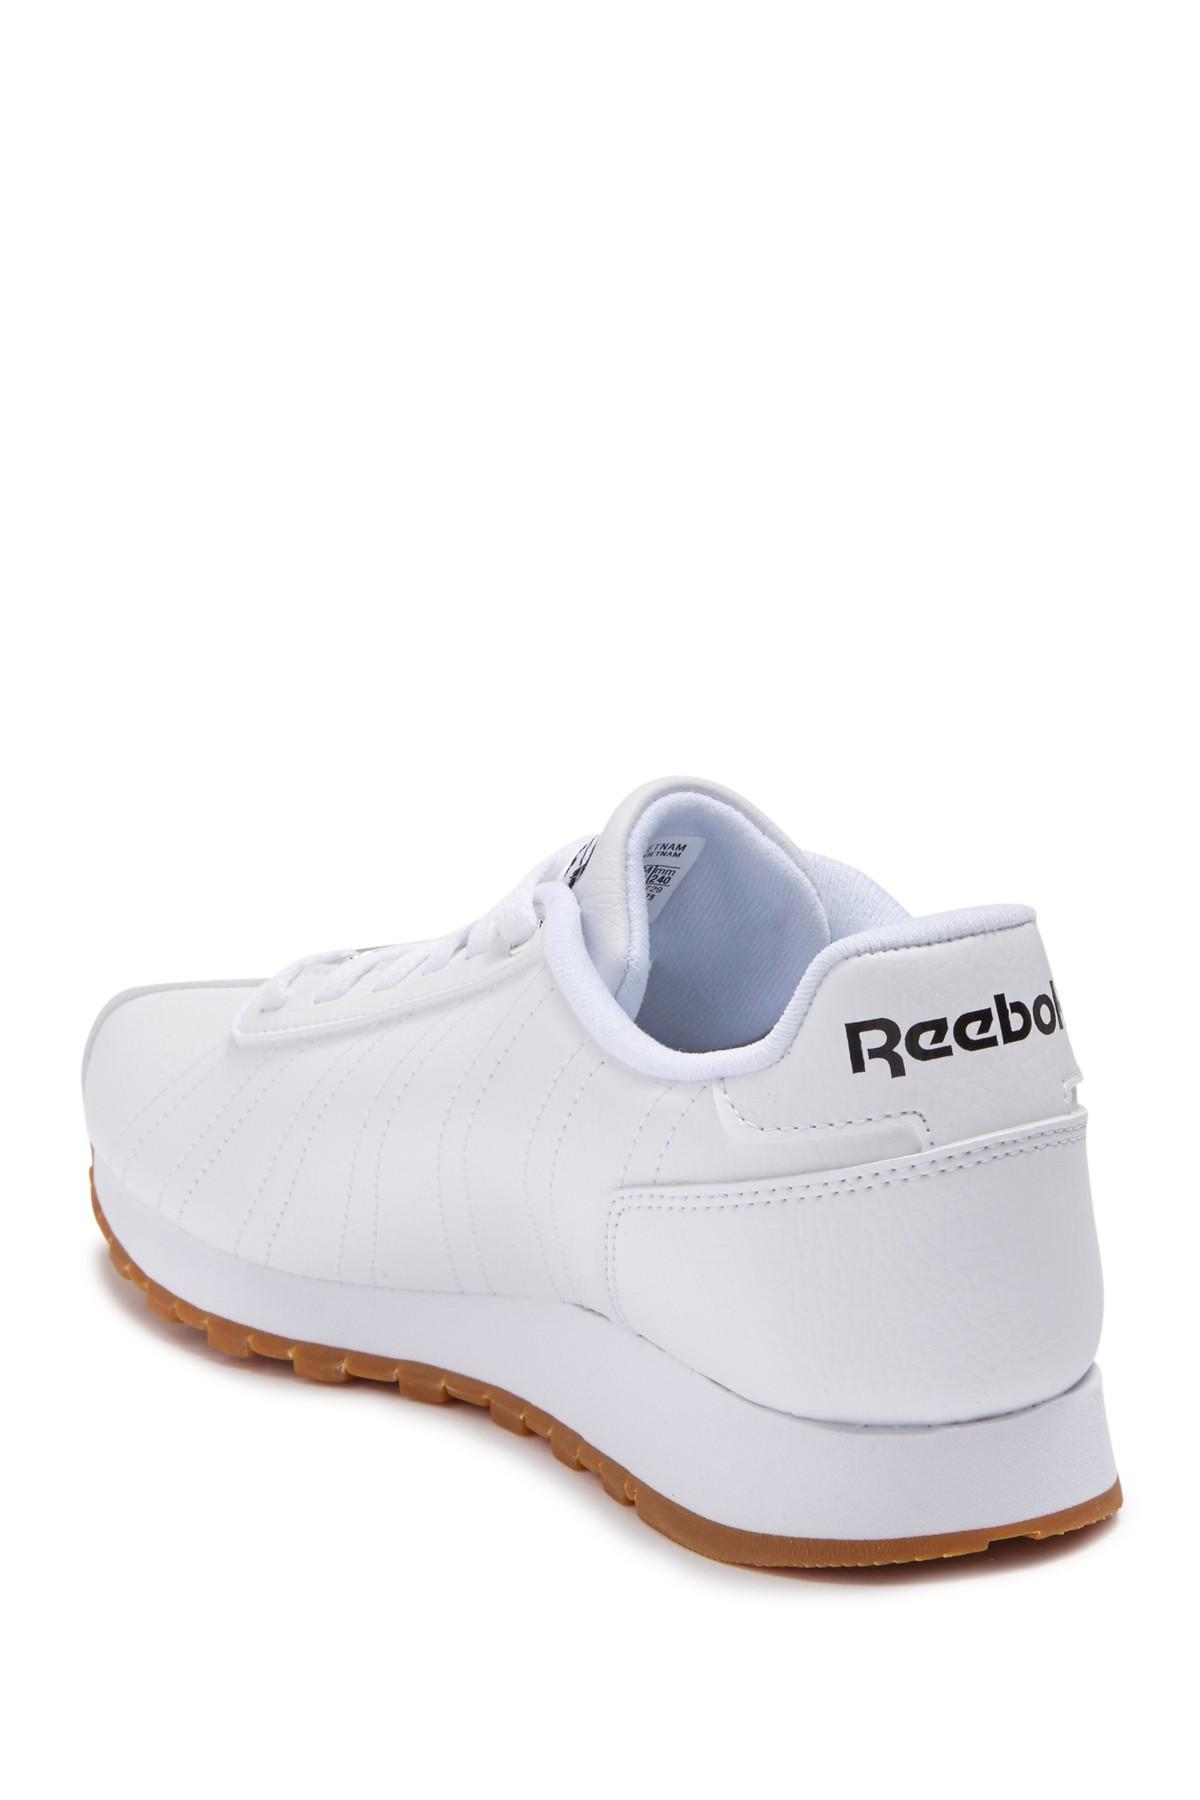 Reebok CL Classic Leather Xyro 2 RBKG06 White Gum Mens Shoes Sizes 7.5-13